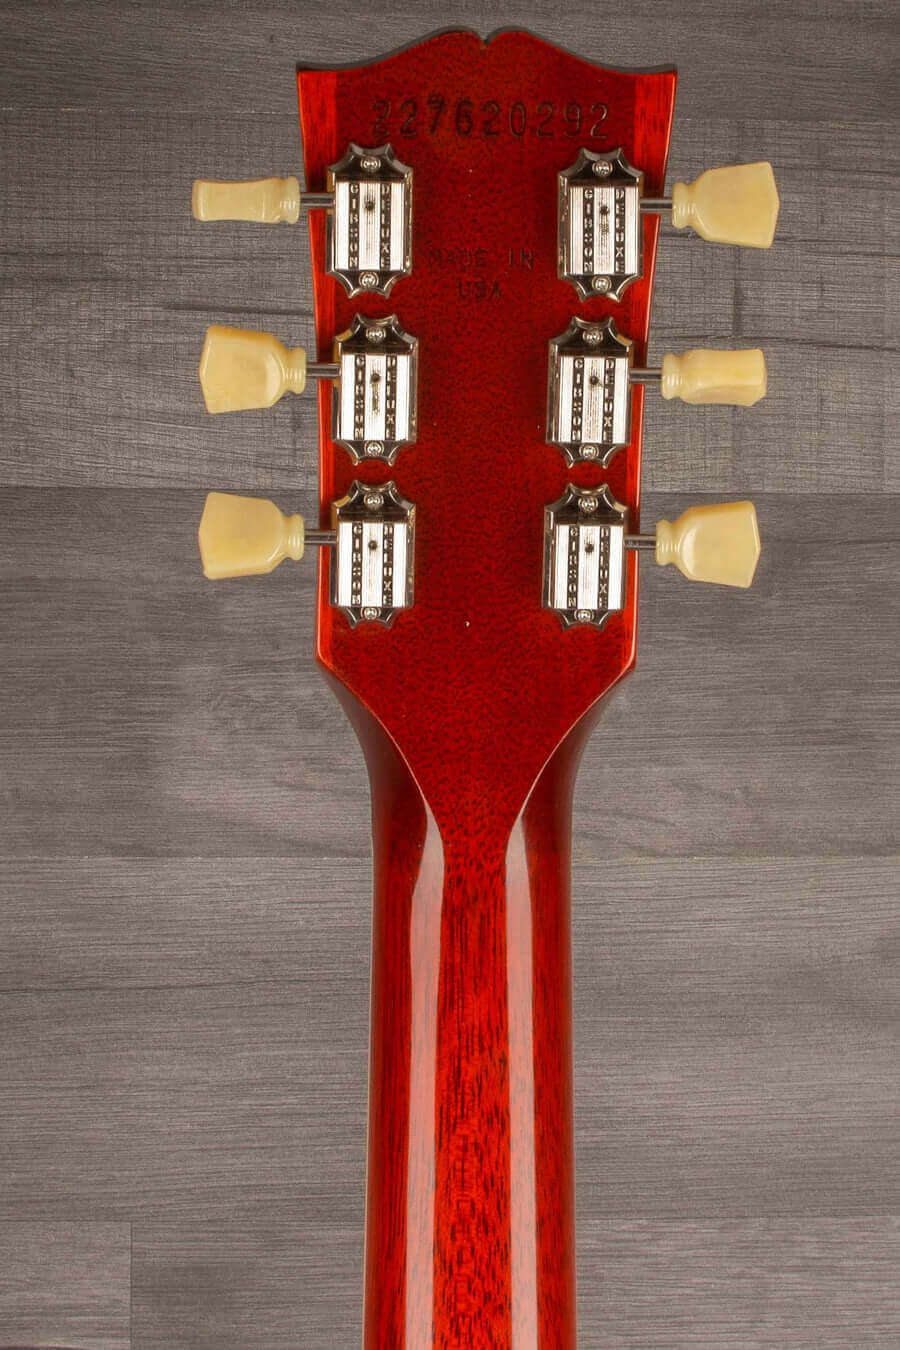 Gibson SG Standard 61 Sideways vibrola - Vintage Cherry s#227620292 - MusicStreet